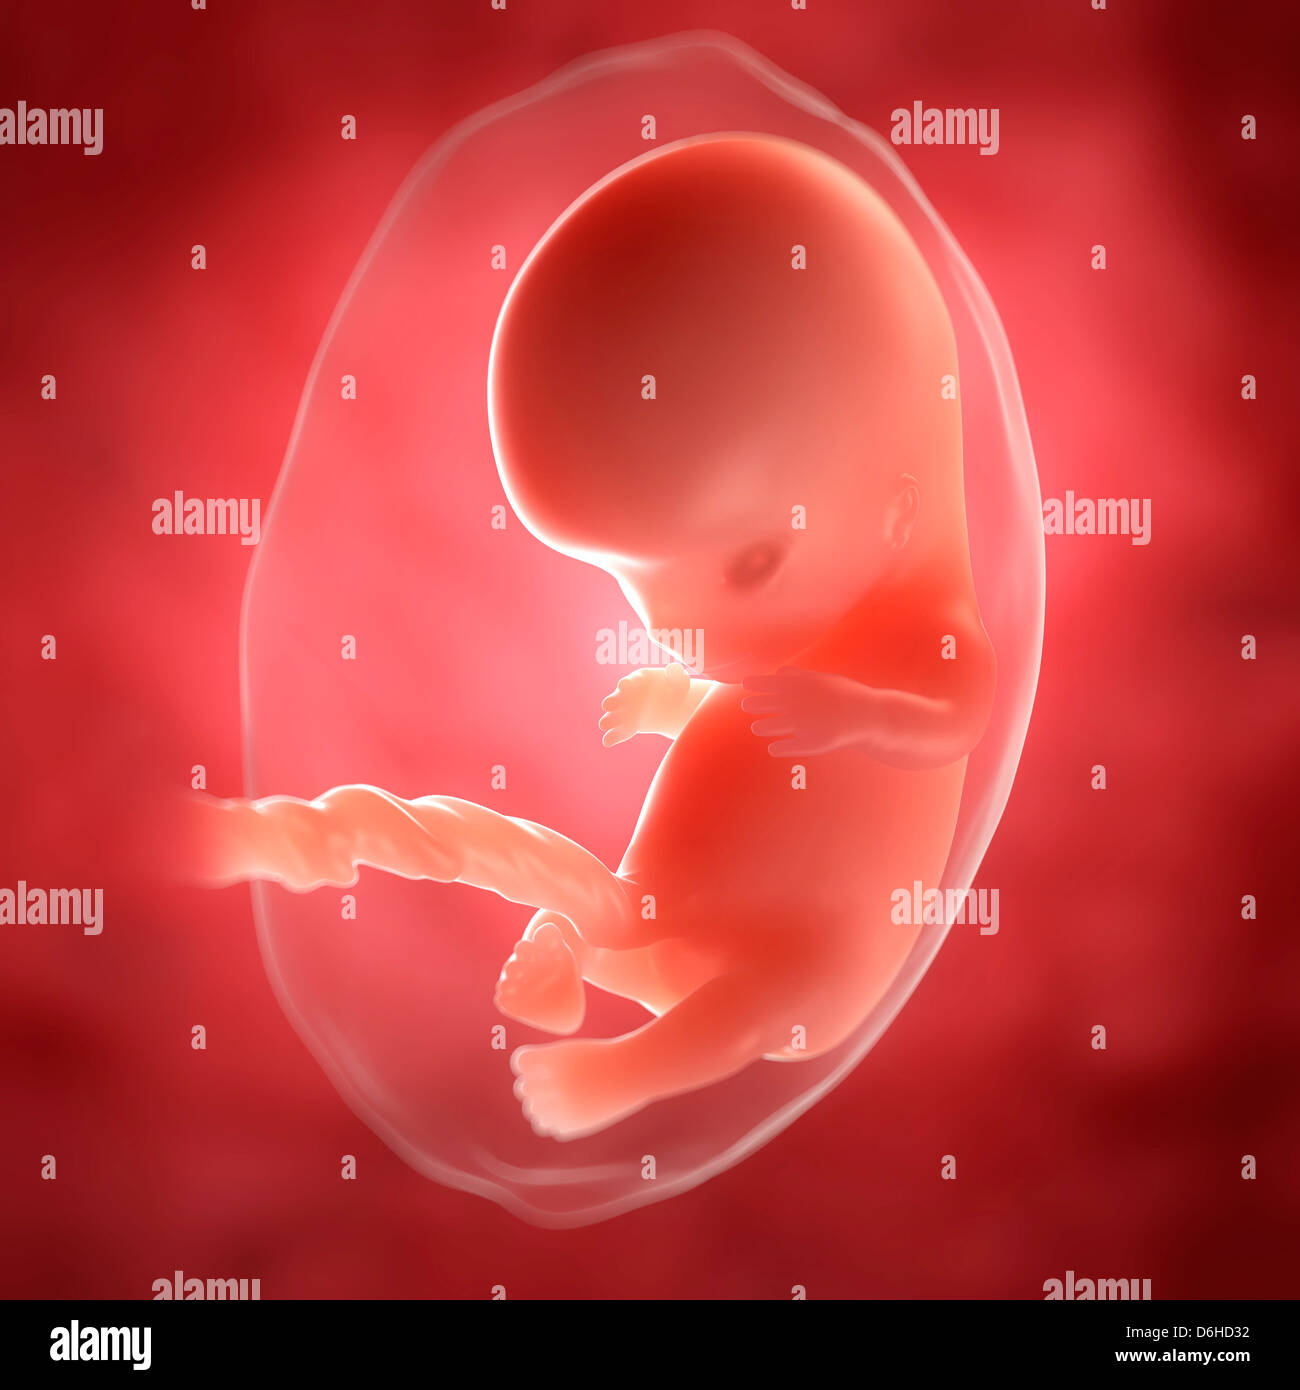 Foetus at 9 weeks, artwork Stock Photo